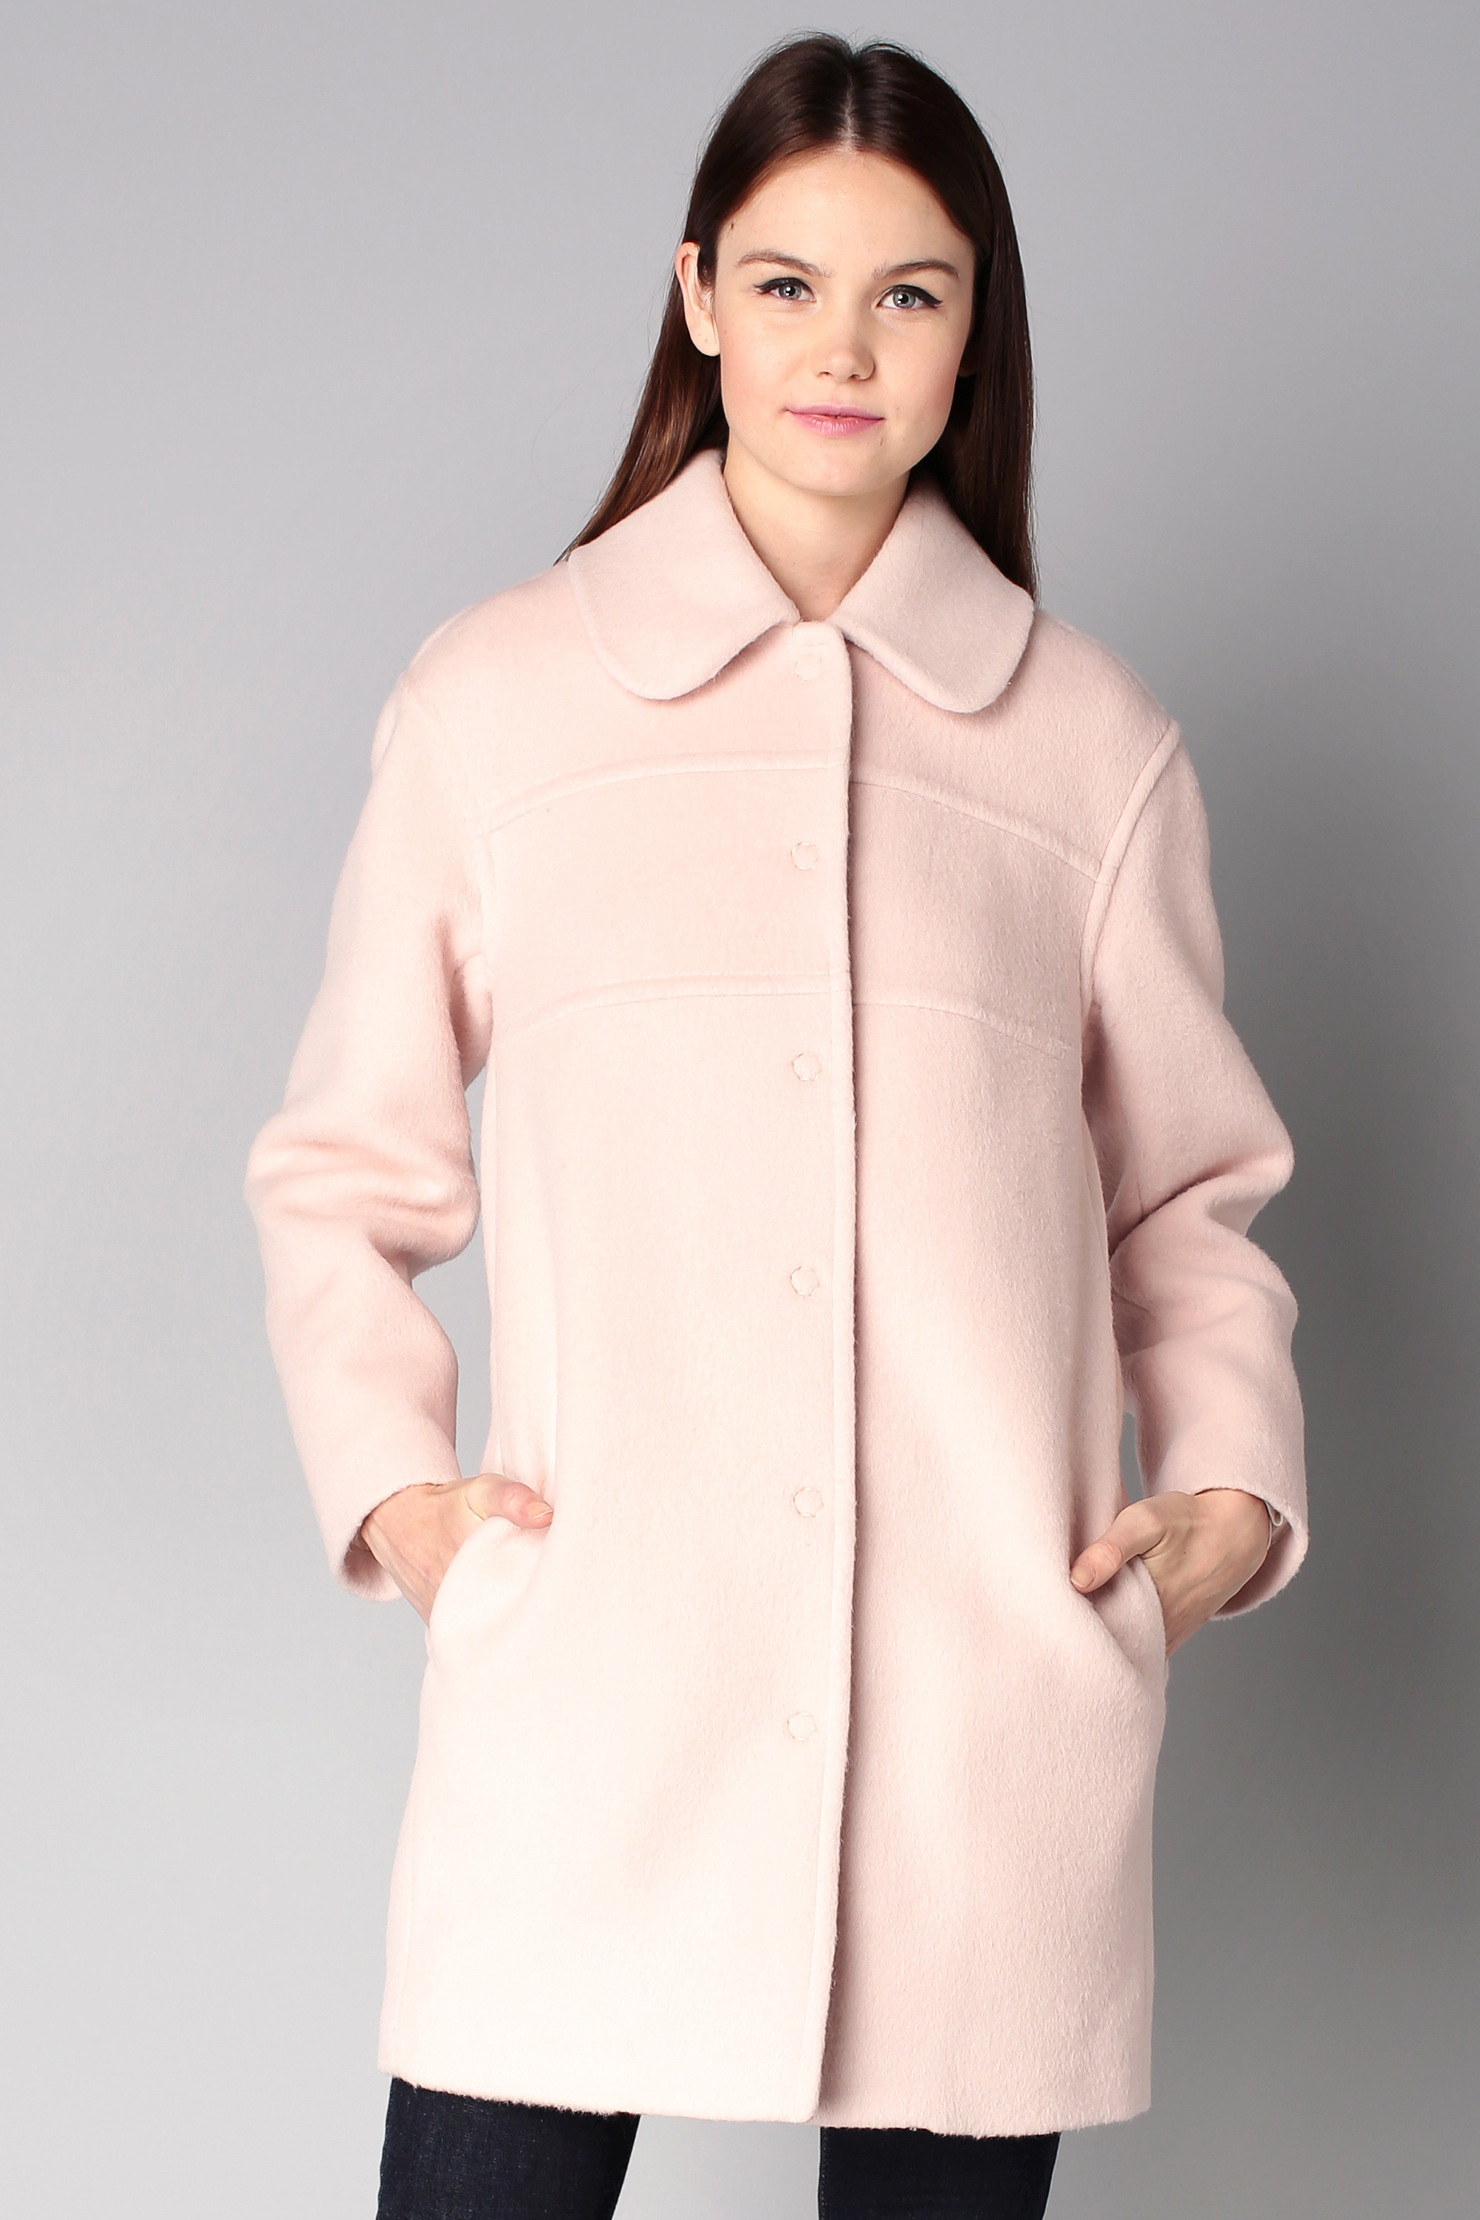 Пальто розовое с широкими рукавами. Серо-розовое пальто Anna verdi. Я люблю пальто.